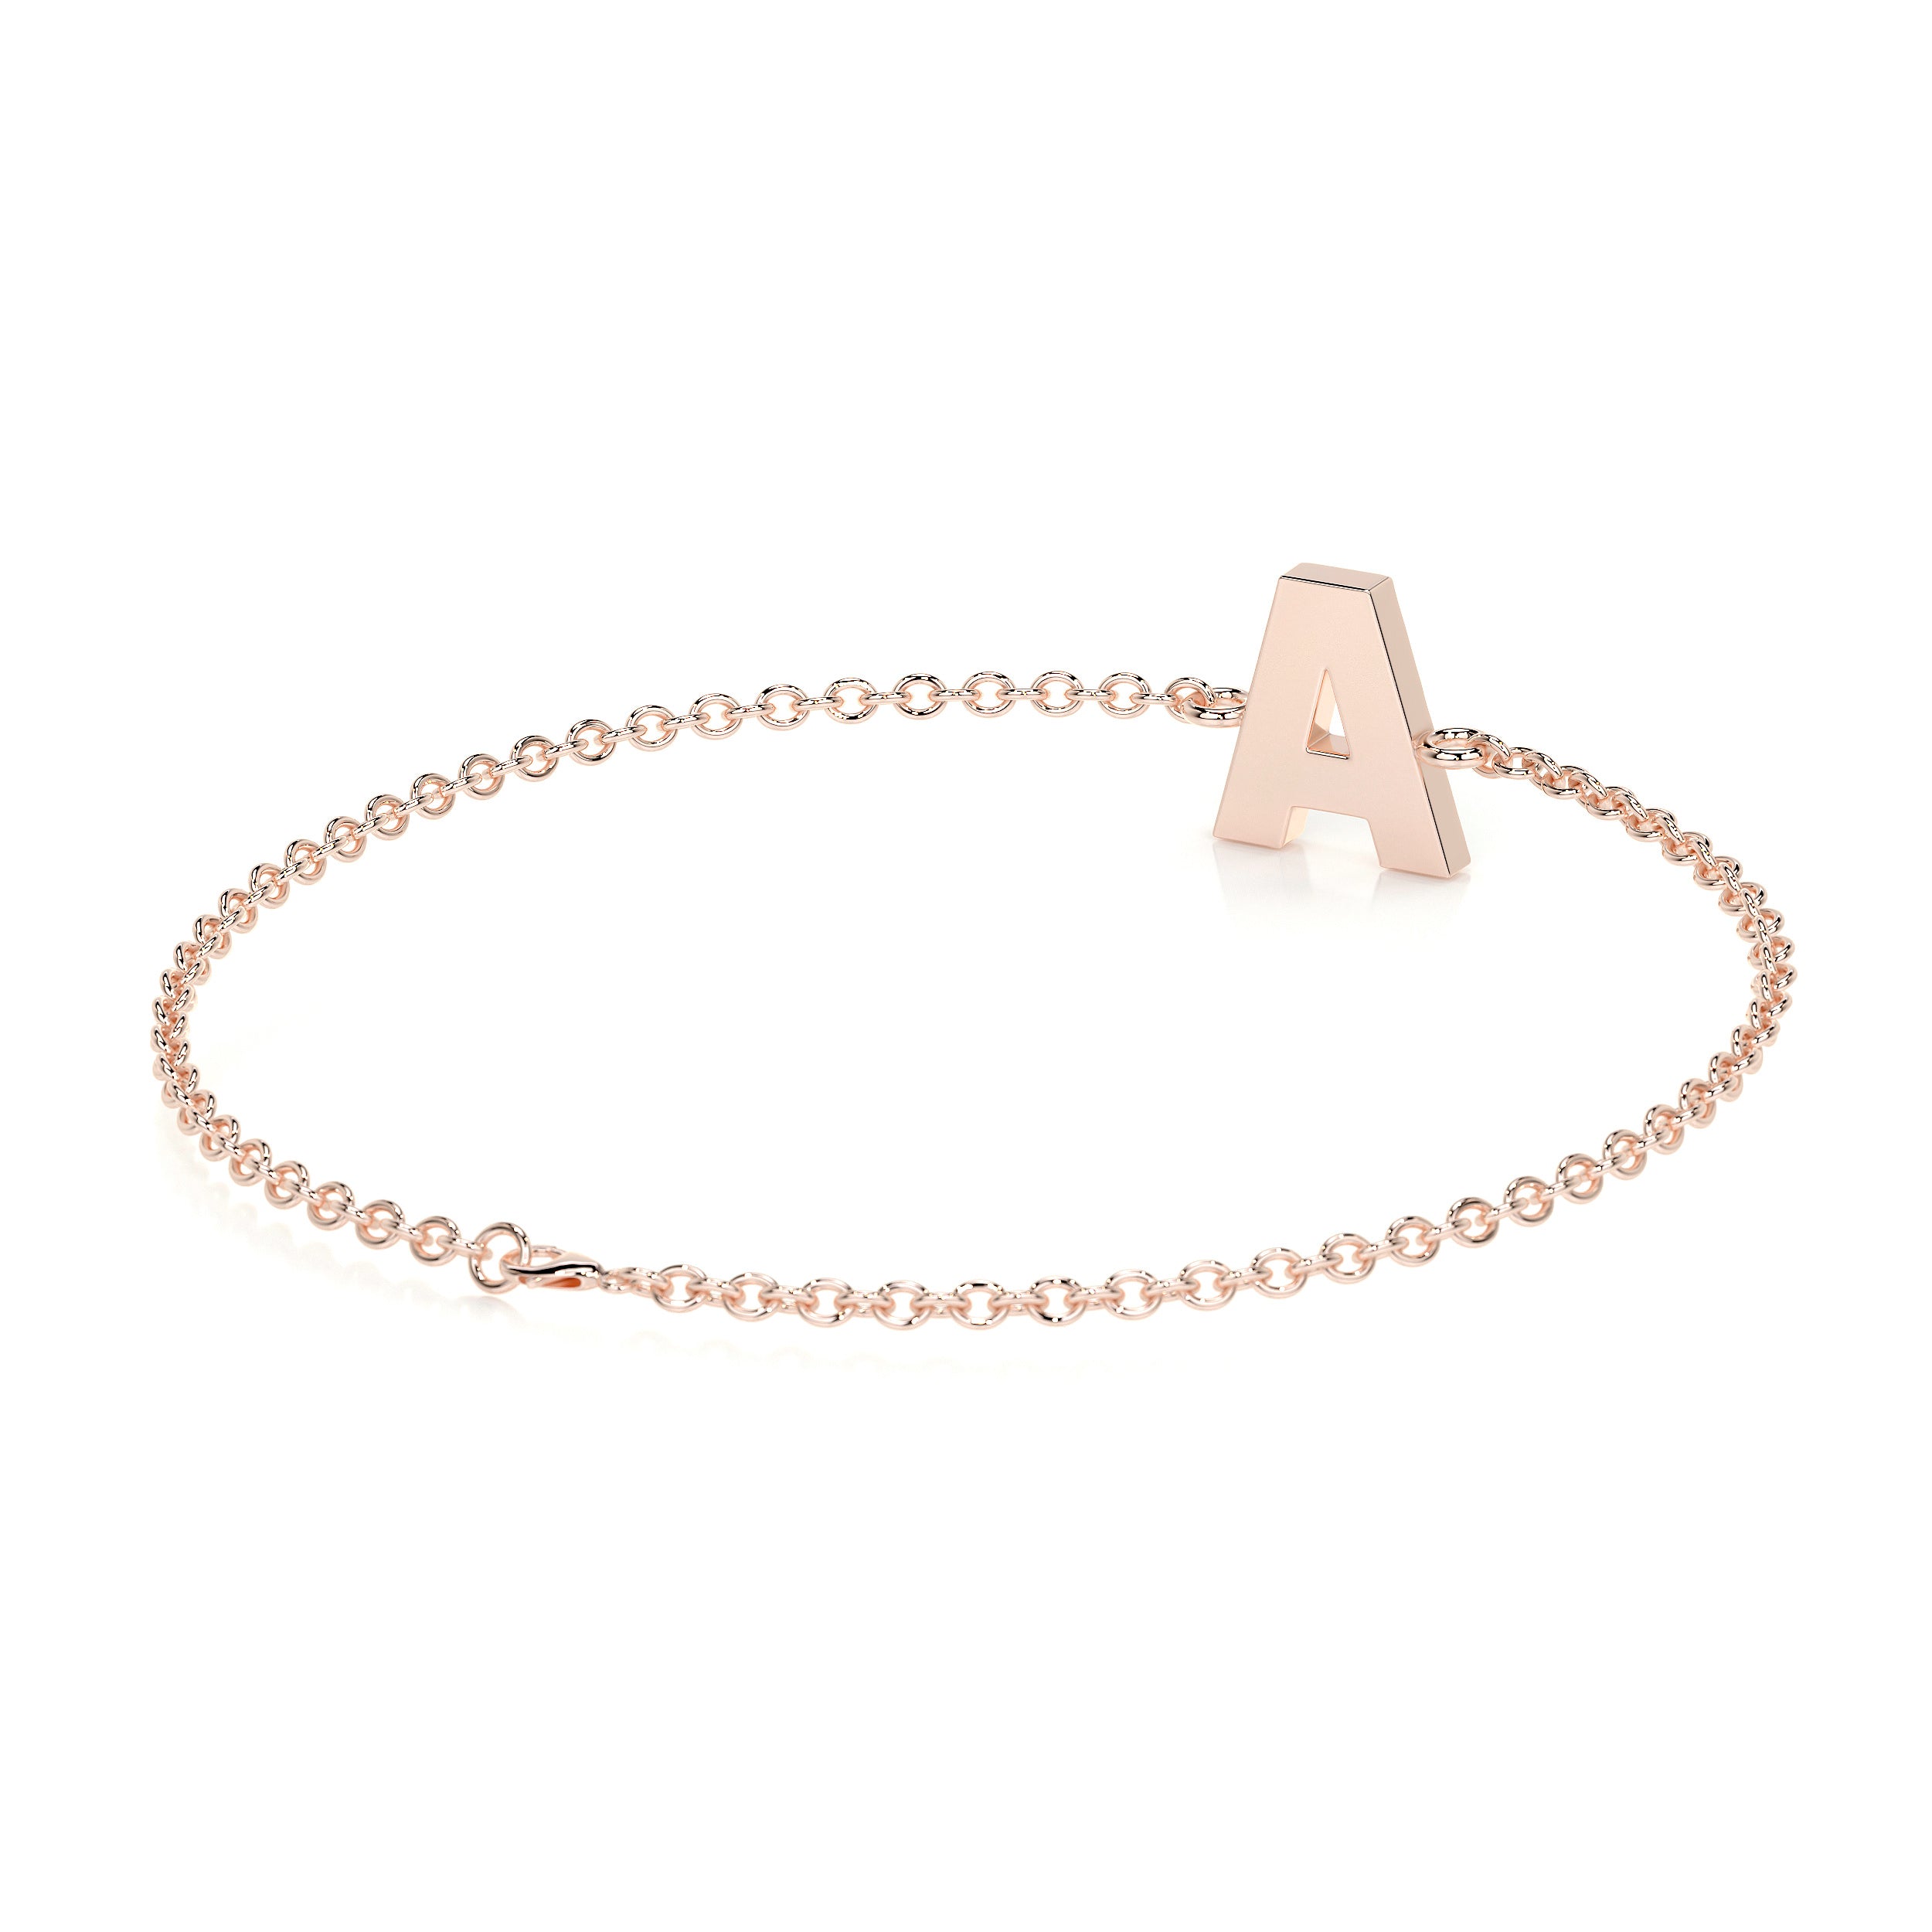 Bridget Letter Diamonds Bracelet   (0.30 Carat) -14K Rose Gold